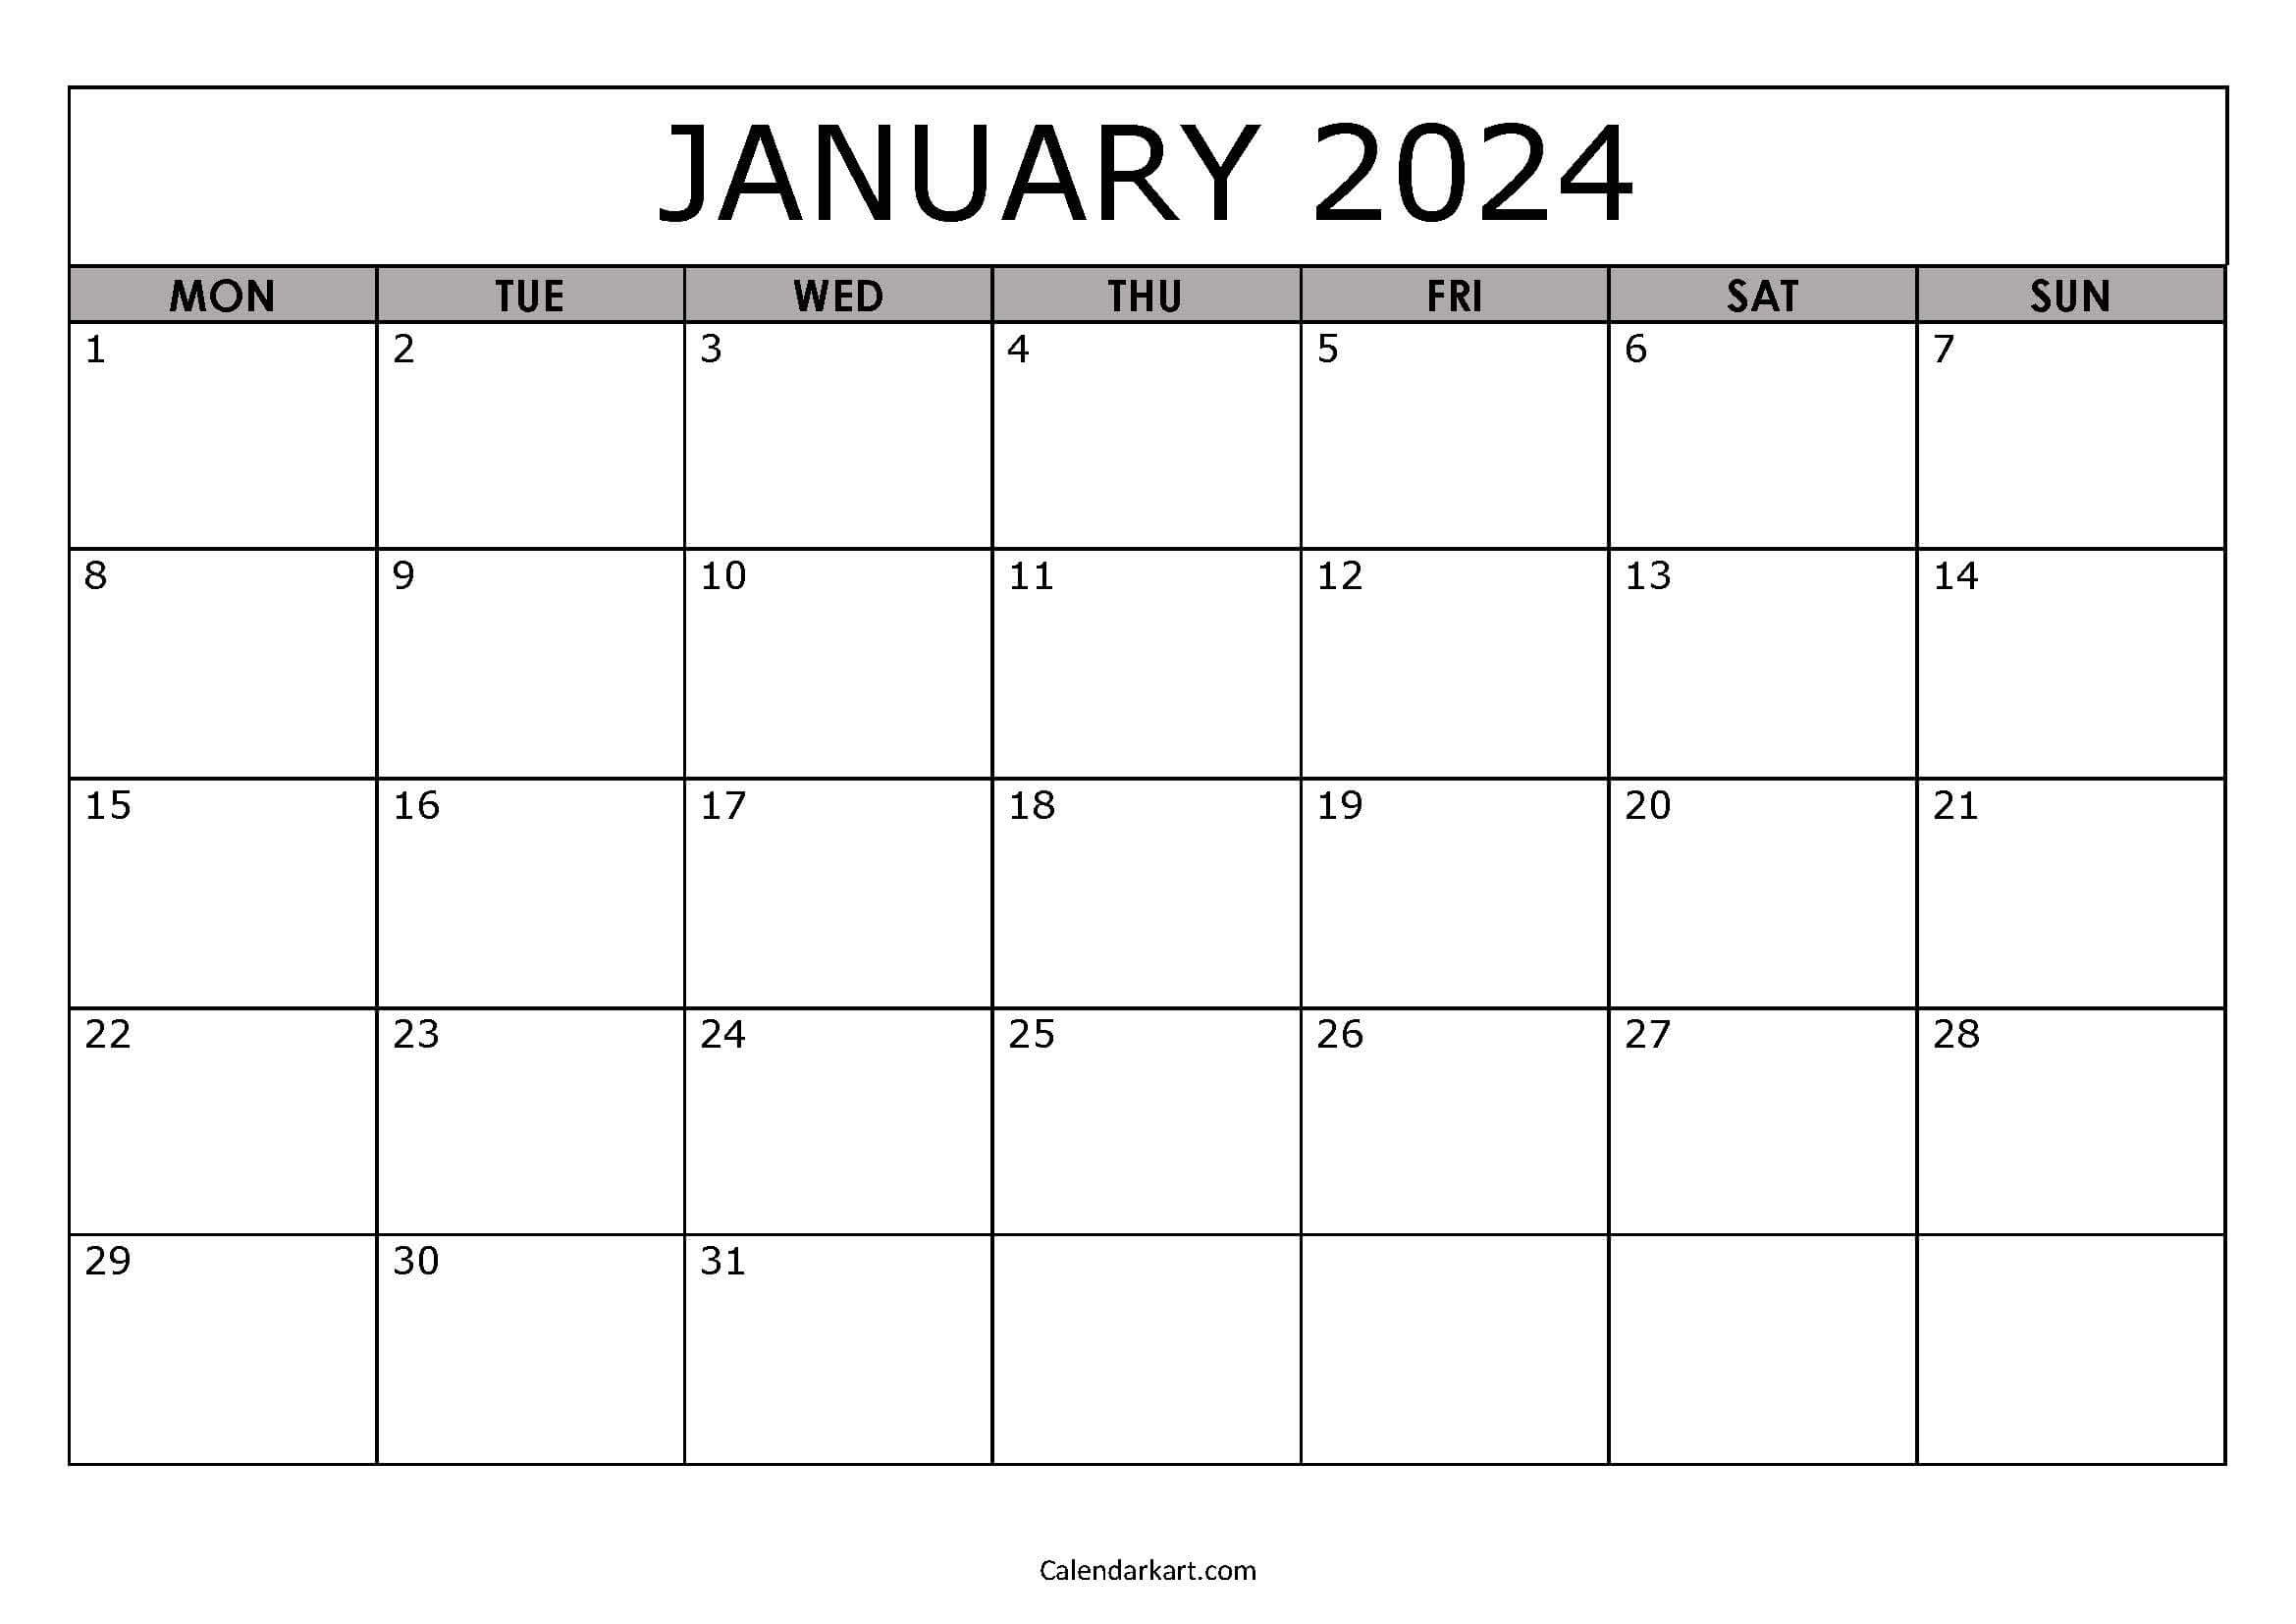 Free Printable January 2024 Calendars - Calendarkart | Printable Calendar 2024 Monday Start